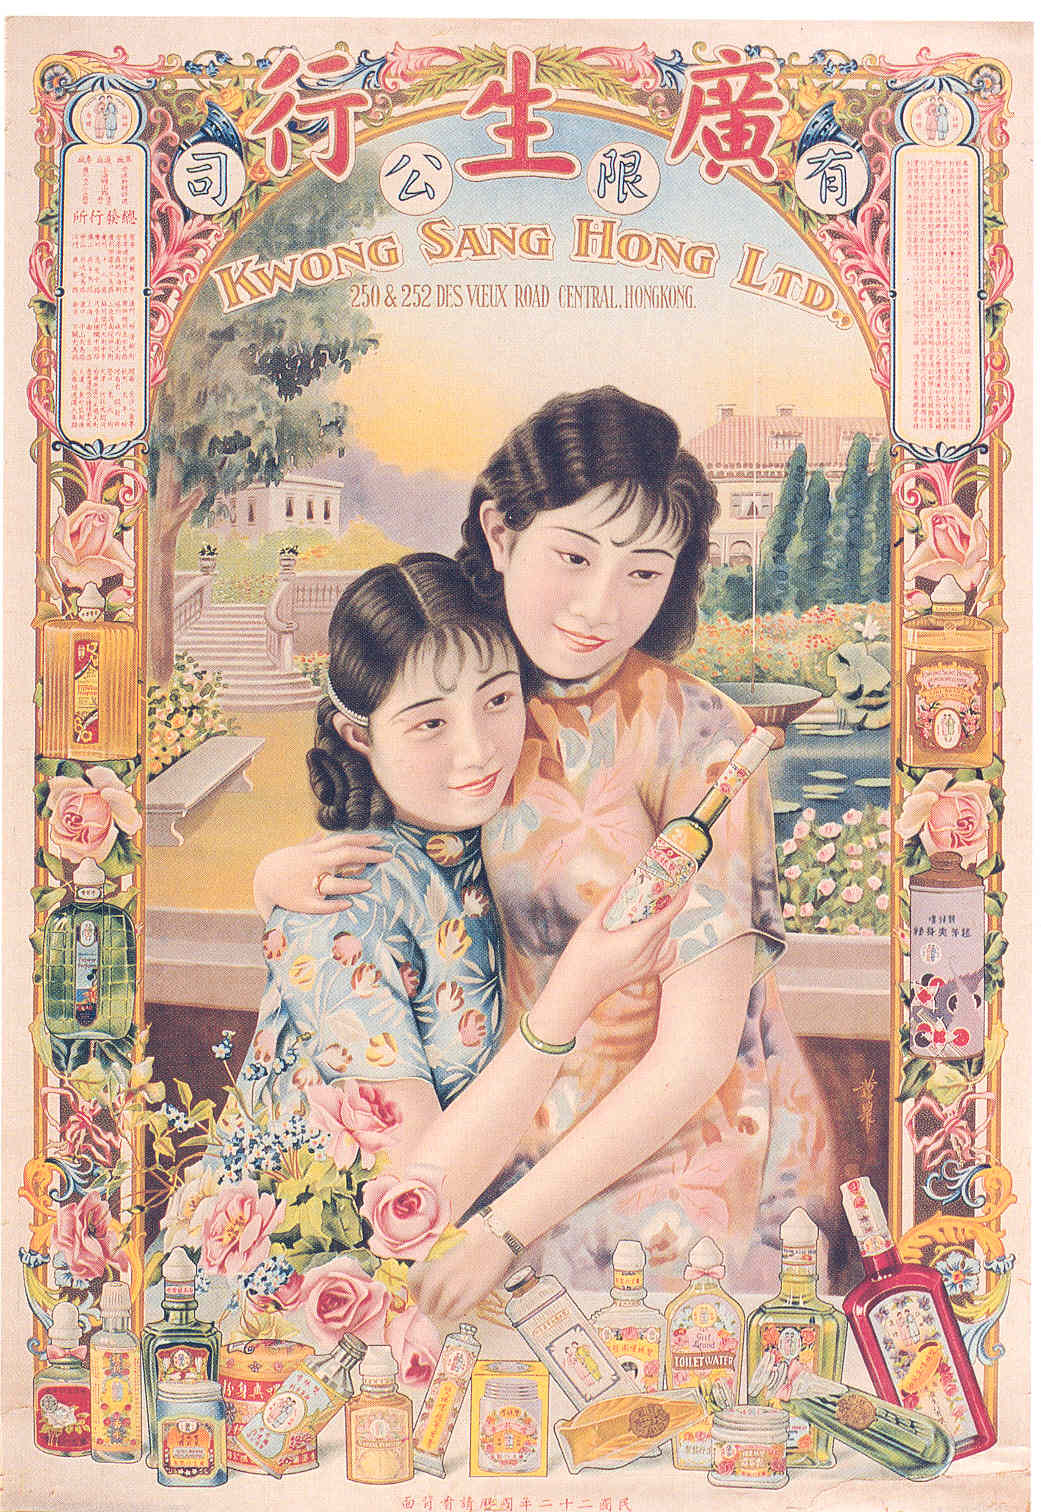 Calendar poster of Kwong Sang Hong Ltd. (3) 